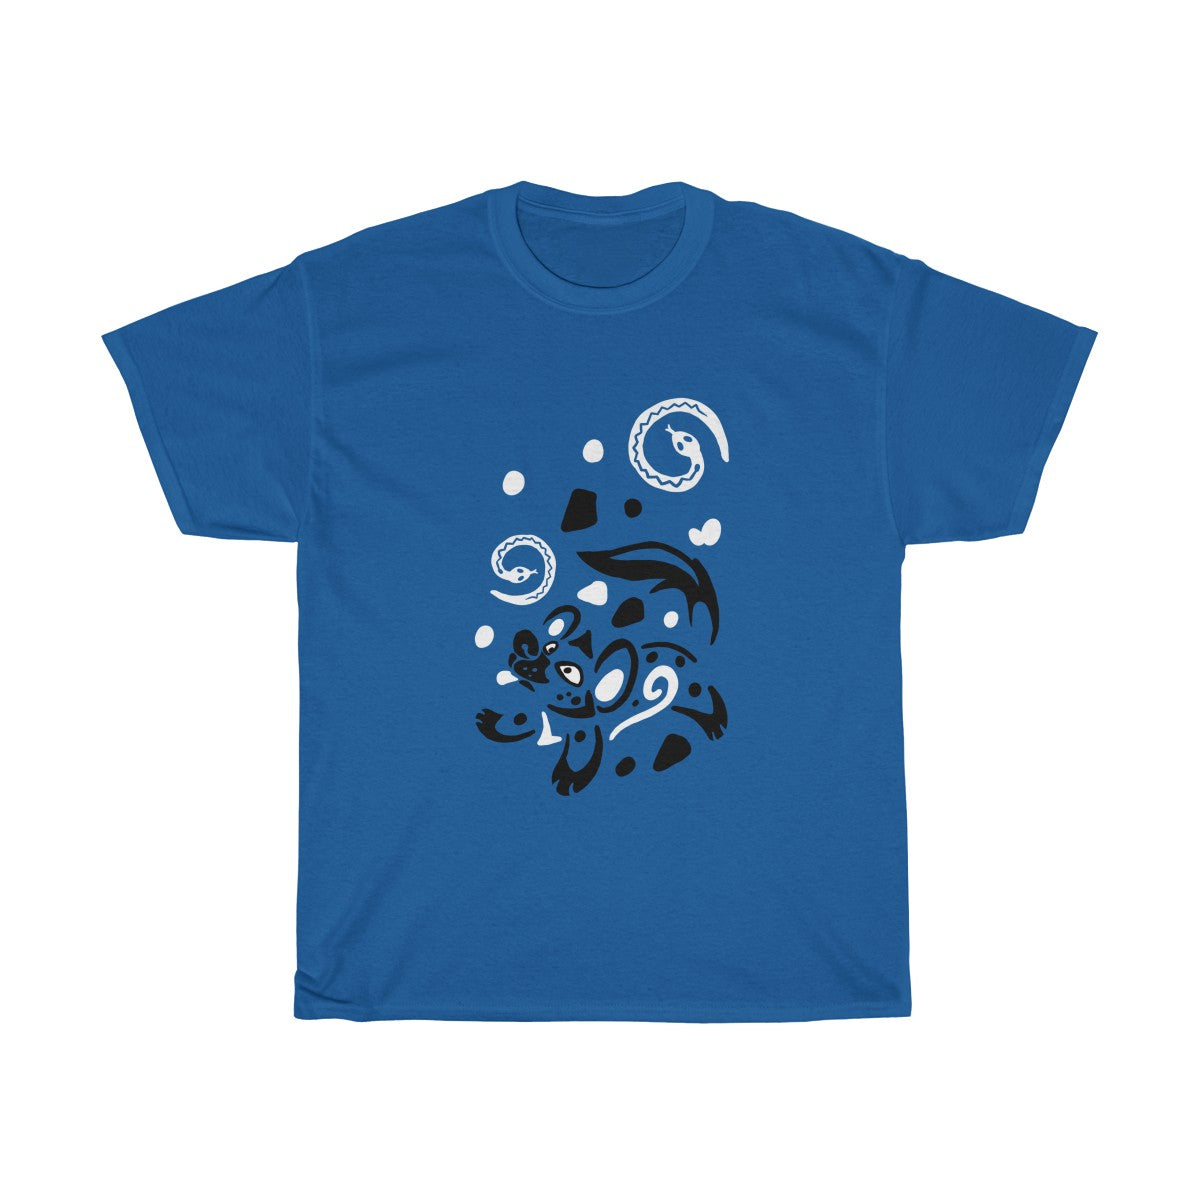 Yeens & Sneks - T-Shirts T-Shirt Dire Creatures Royal Blue S 